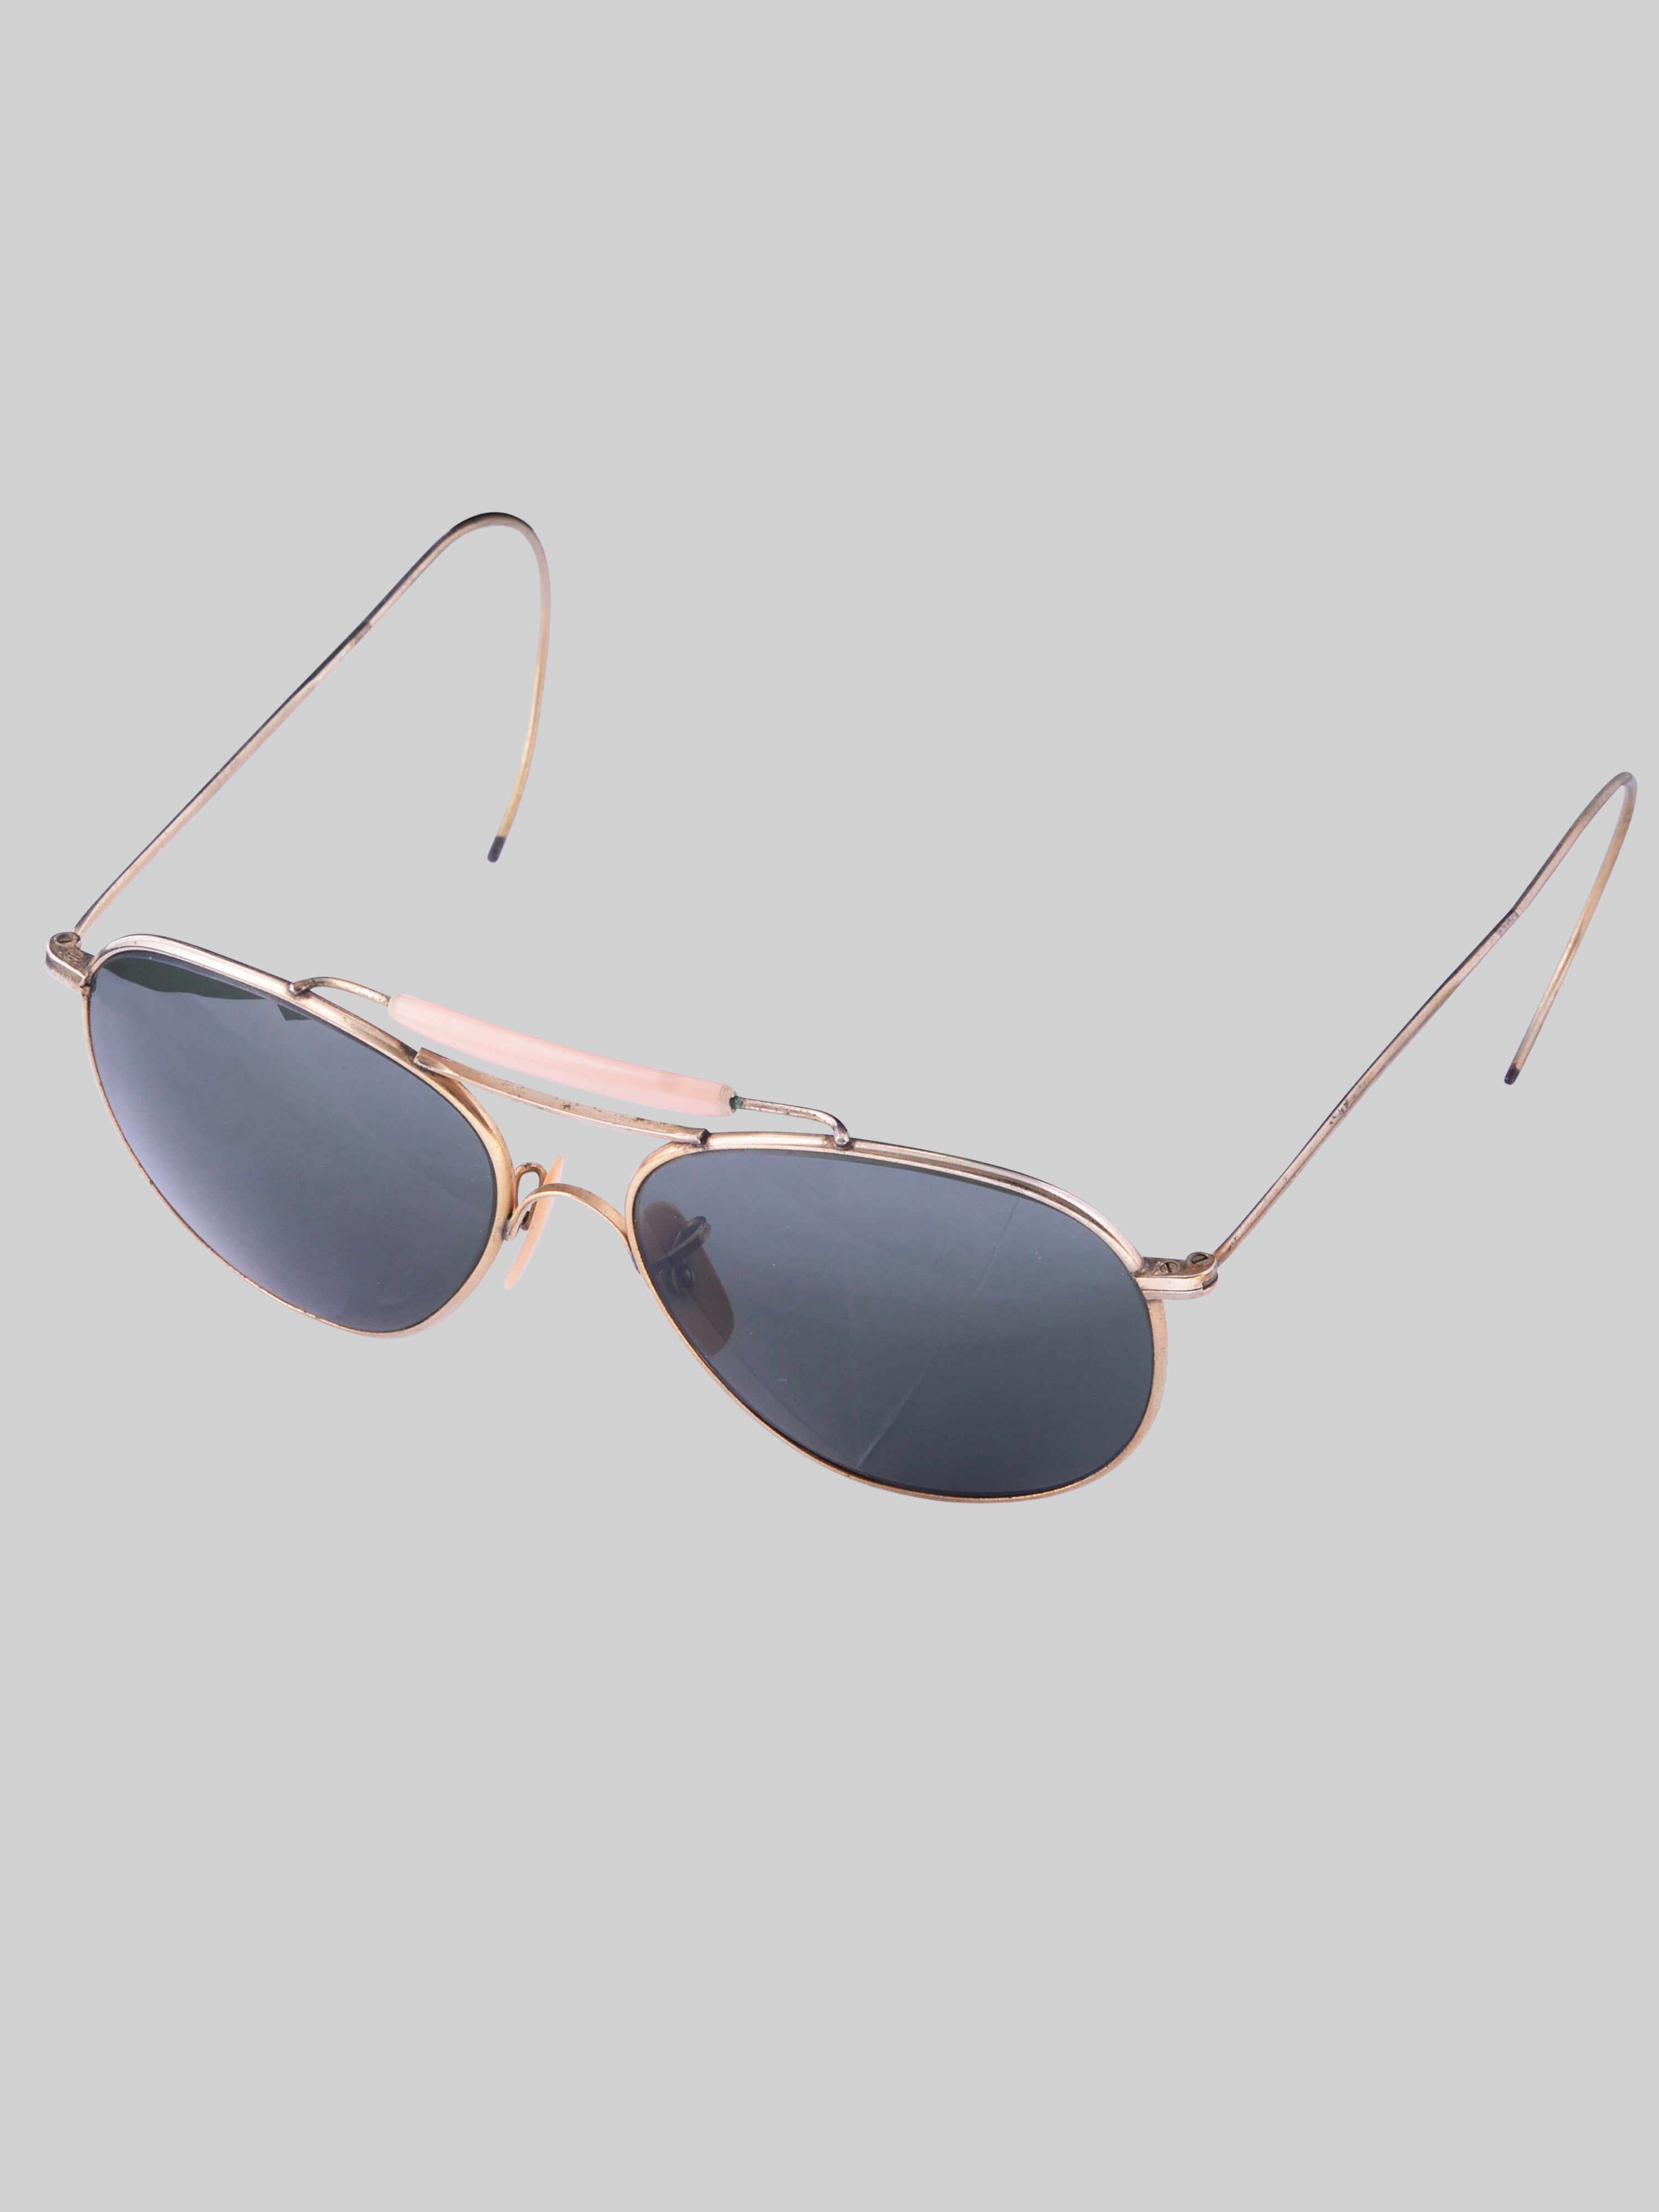 1940s American Optical Aviator Sunglasses